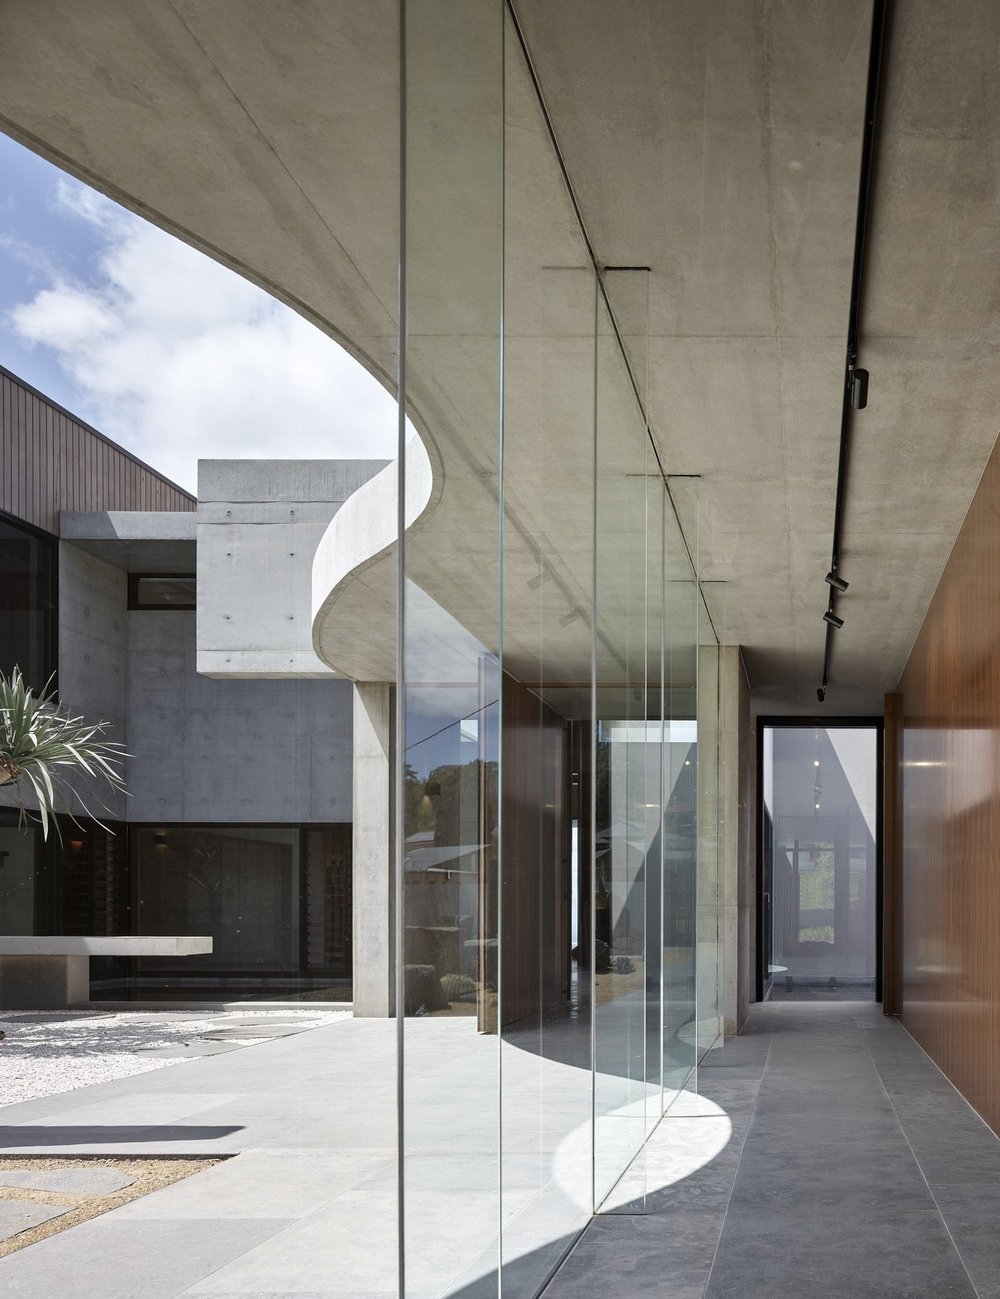 shaun-lockyer-architects-onedin-glass-concrete-architecture.jpg